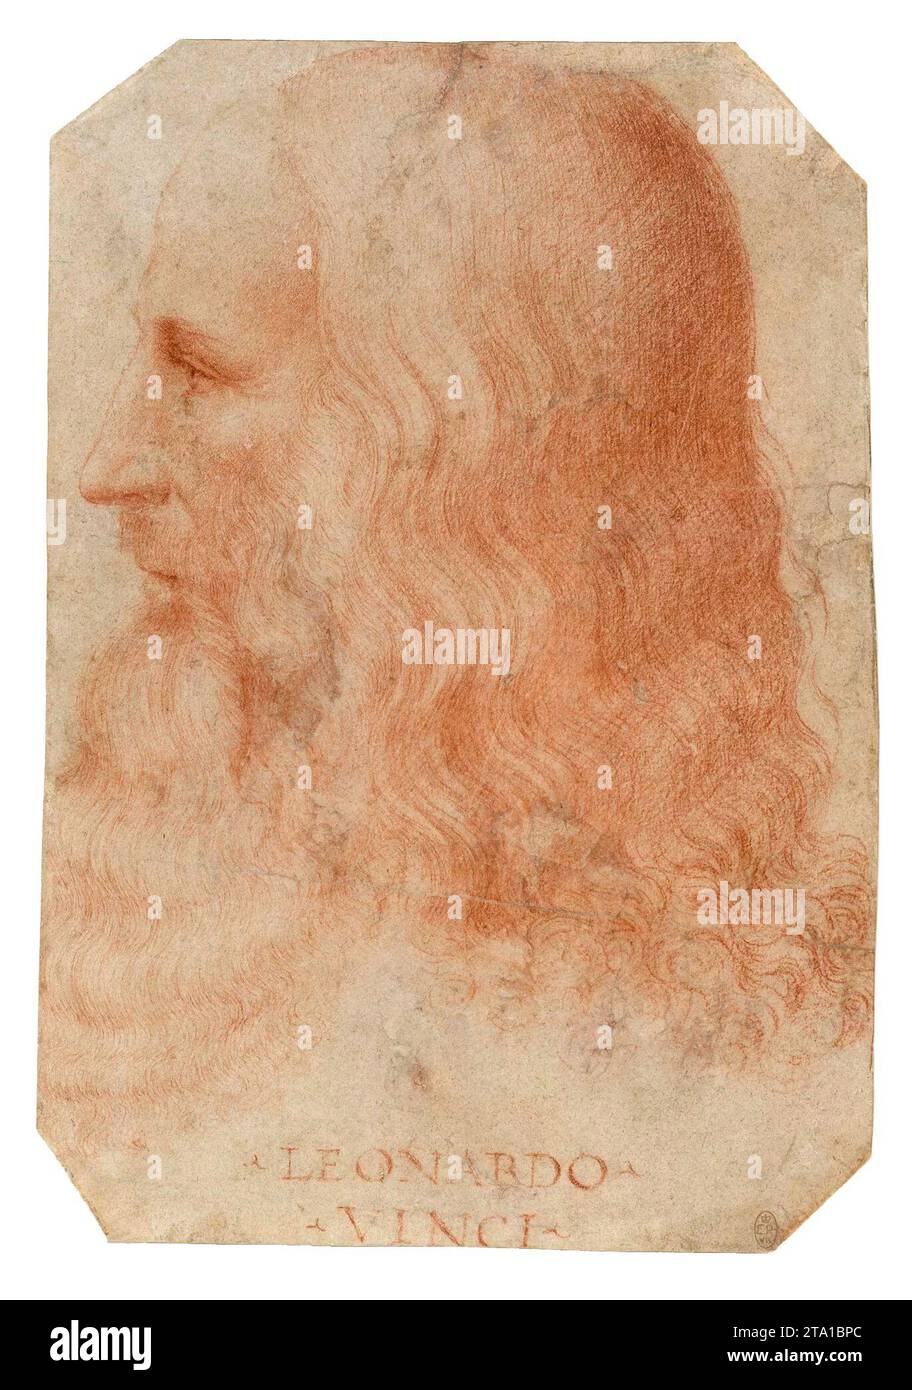 Francesco Melzi - Portrait of Leonardo da Vinci, c 1515-1517 Stock Photo